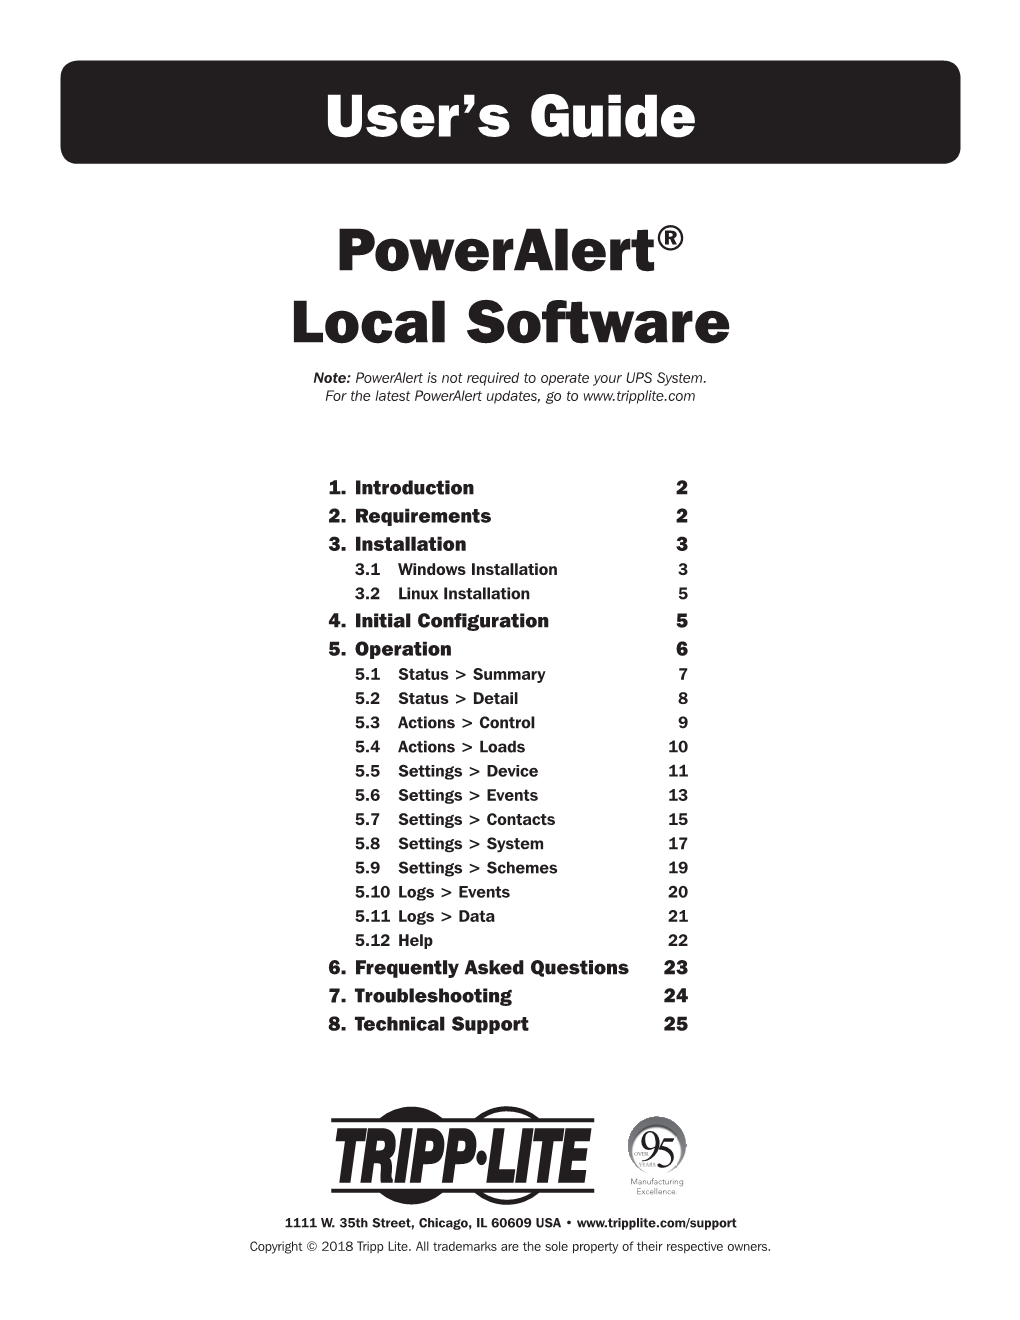 User's Guide Poweralert® Local Software